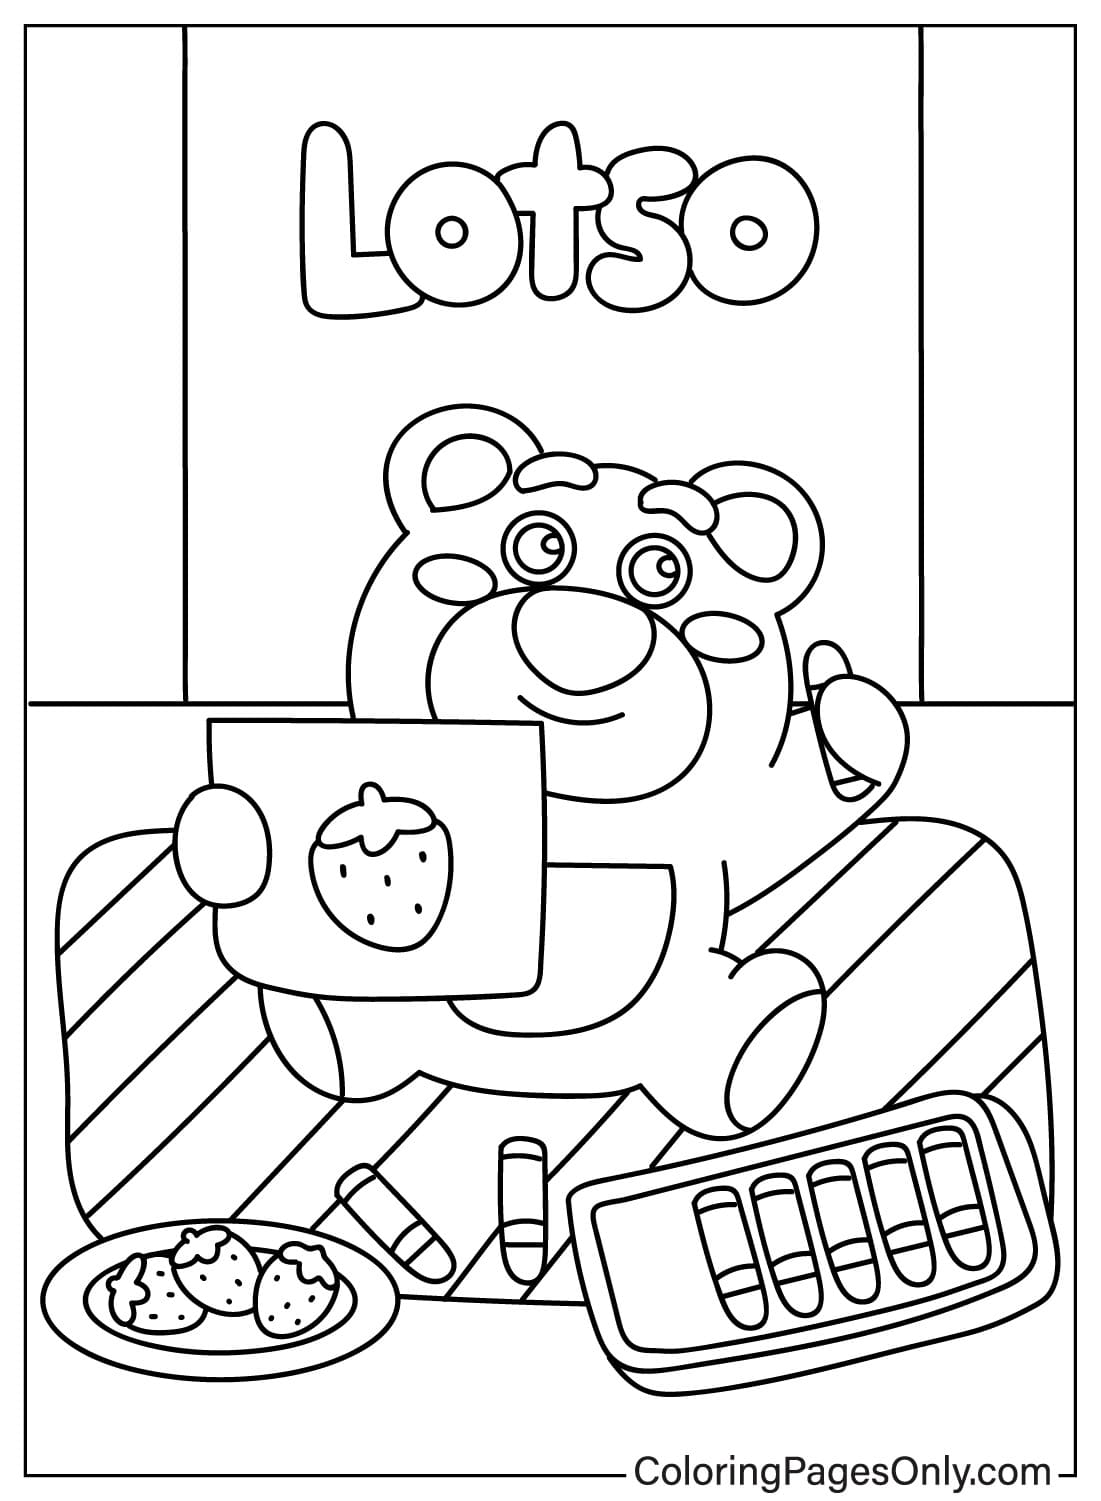 Lotso Bear Coloring Book from Lotso Bear